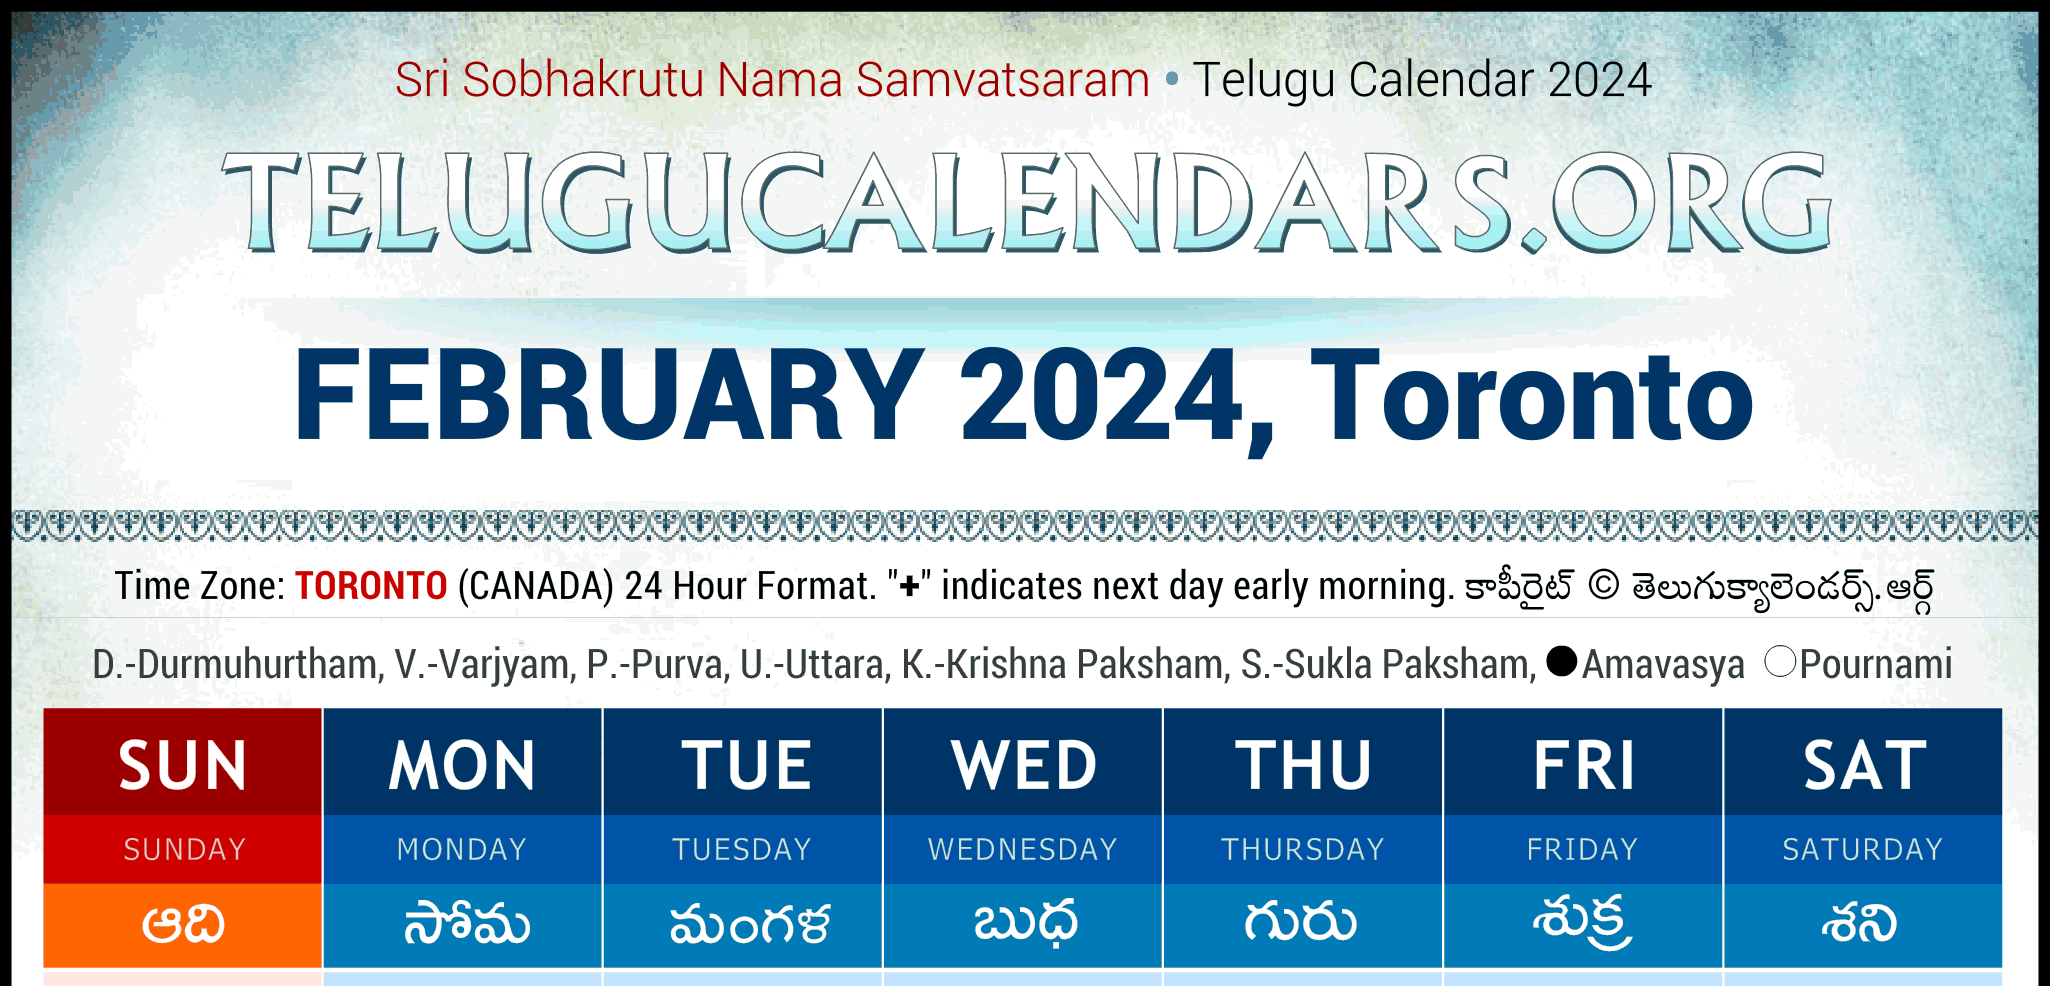 Telugu Calendar 2024 Toronto